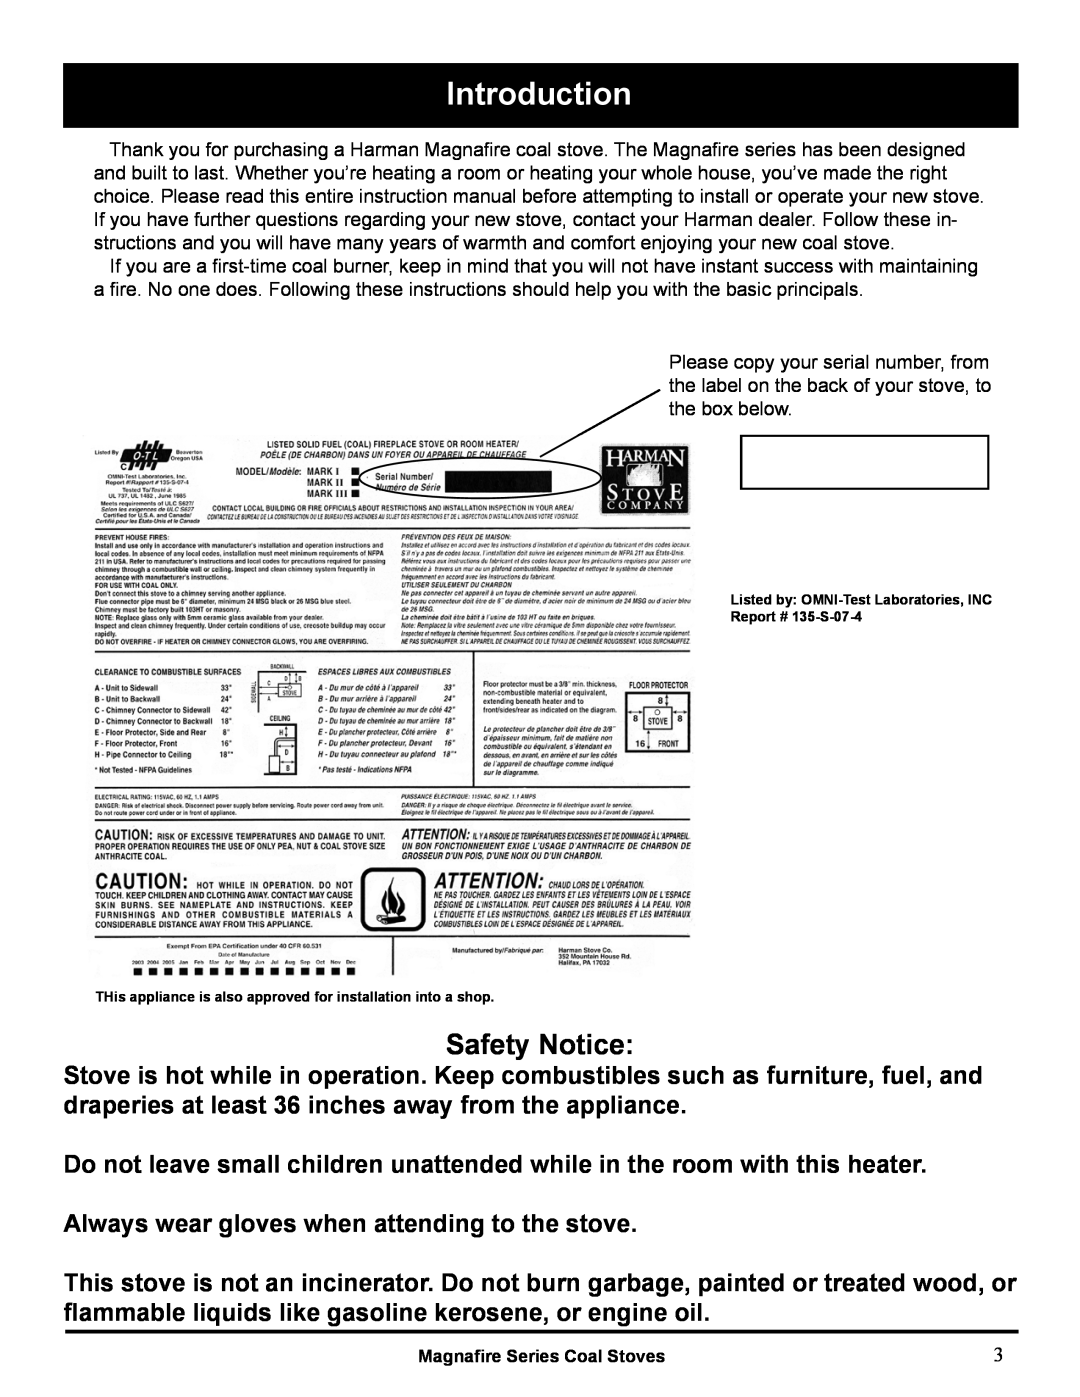 Harman Stove Company MARK III manual Introduction, Safety Notice 